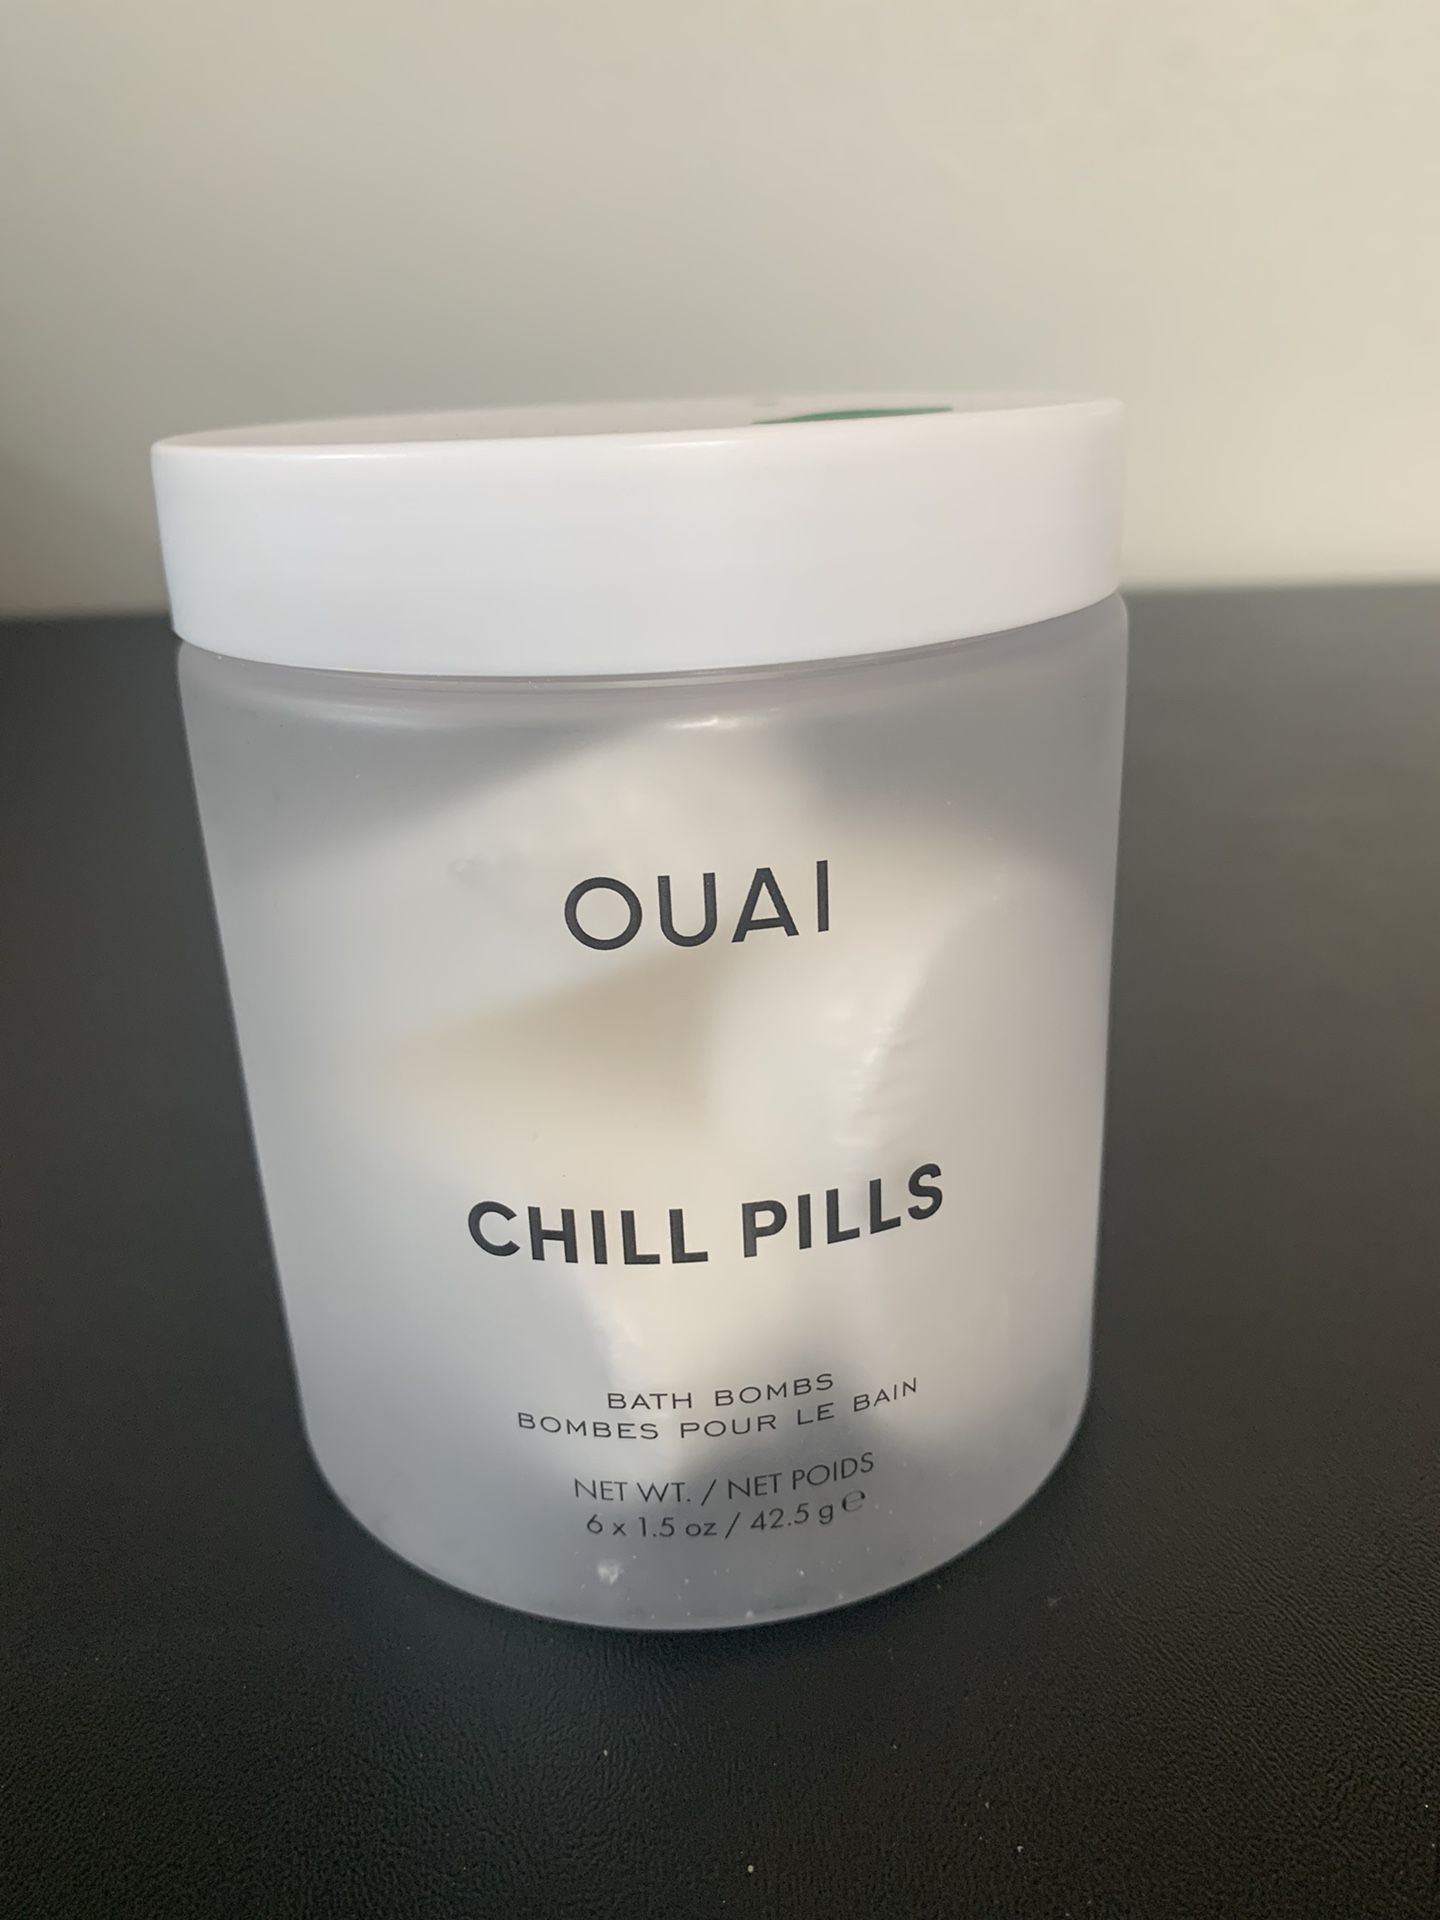 Oral Chill Pills Bath Bombs 5x1.5 oz $20